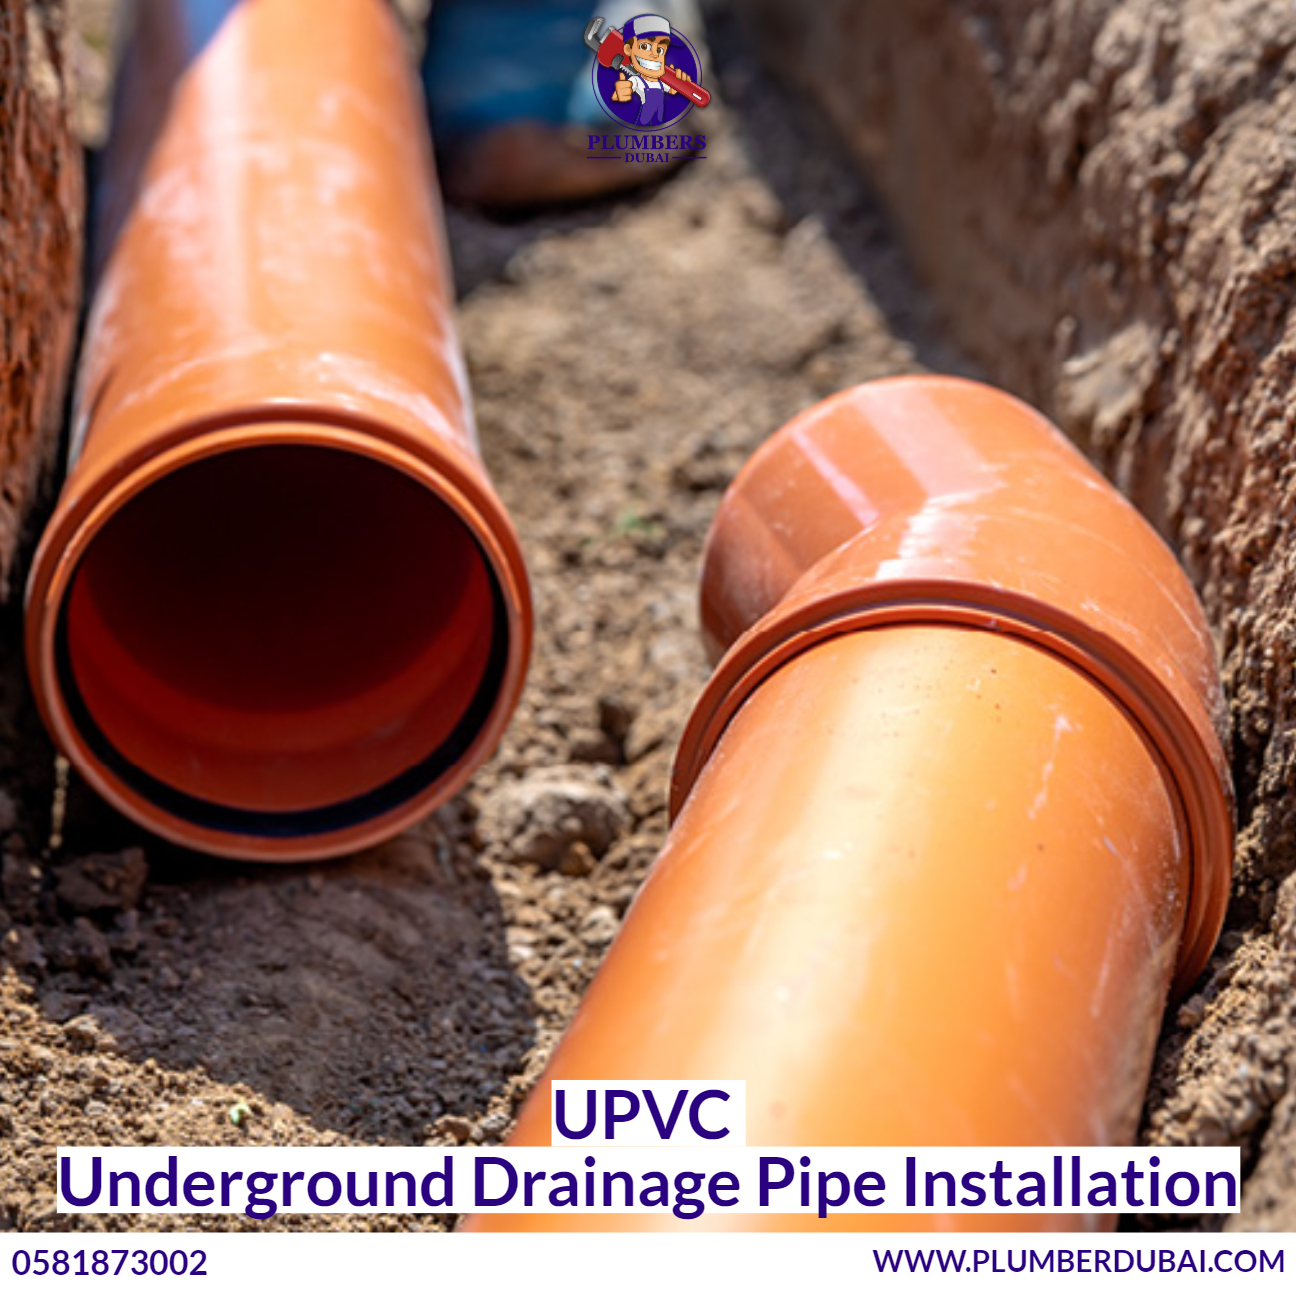 UPVC Underground Drainage Pipe Installation